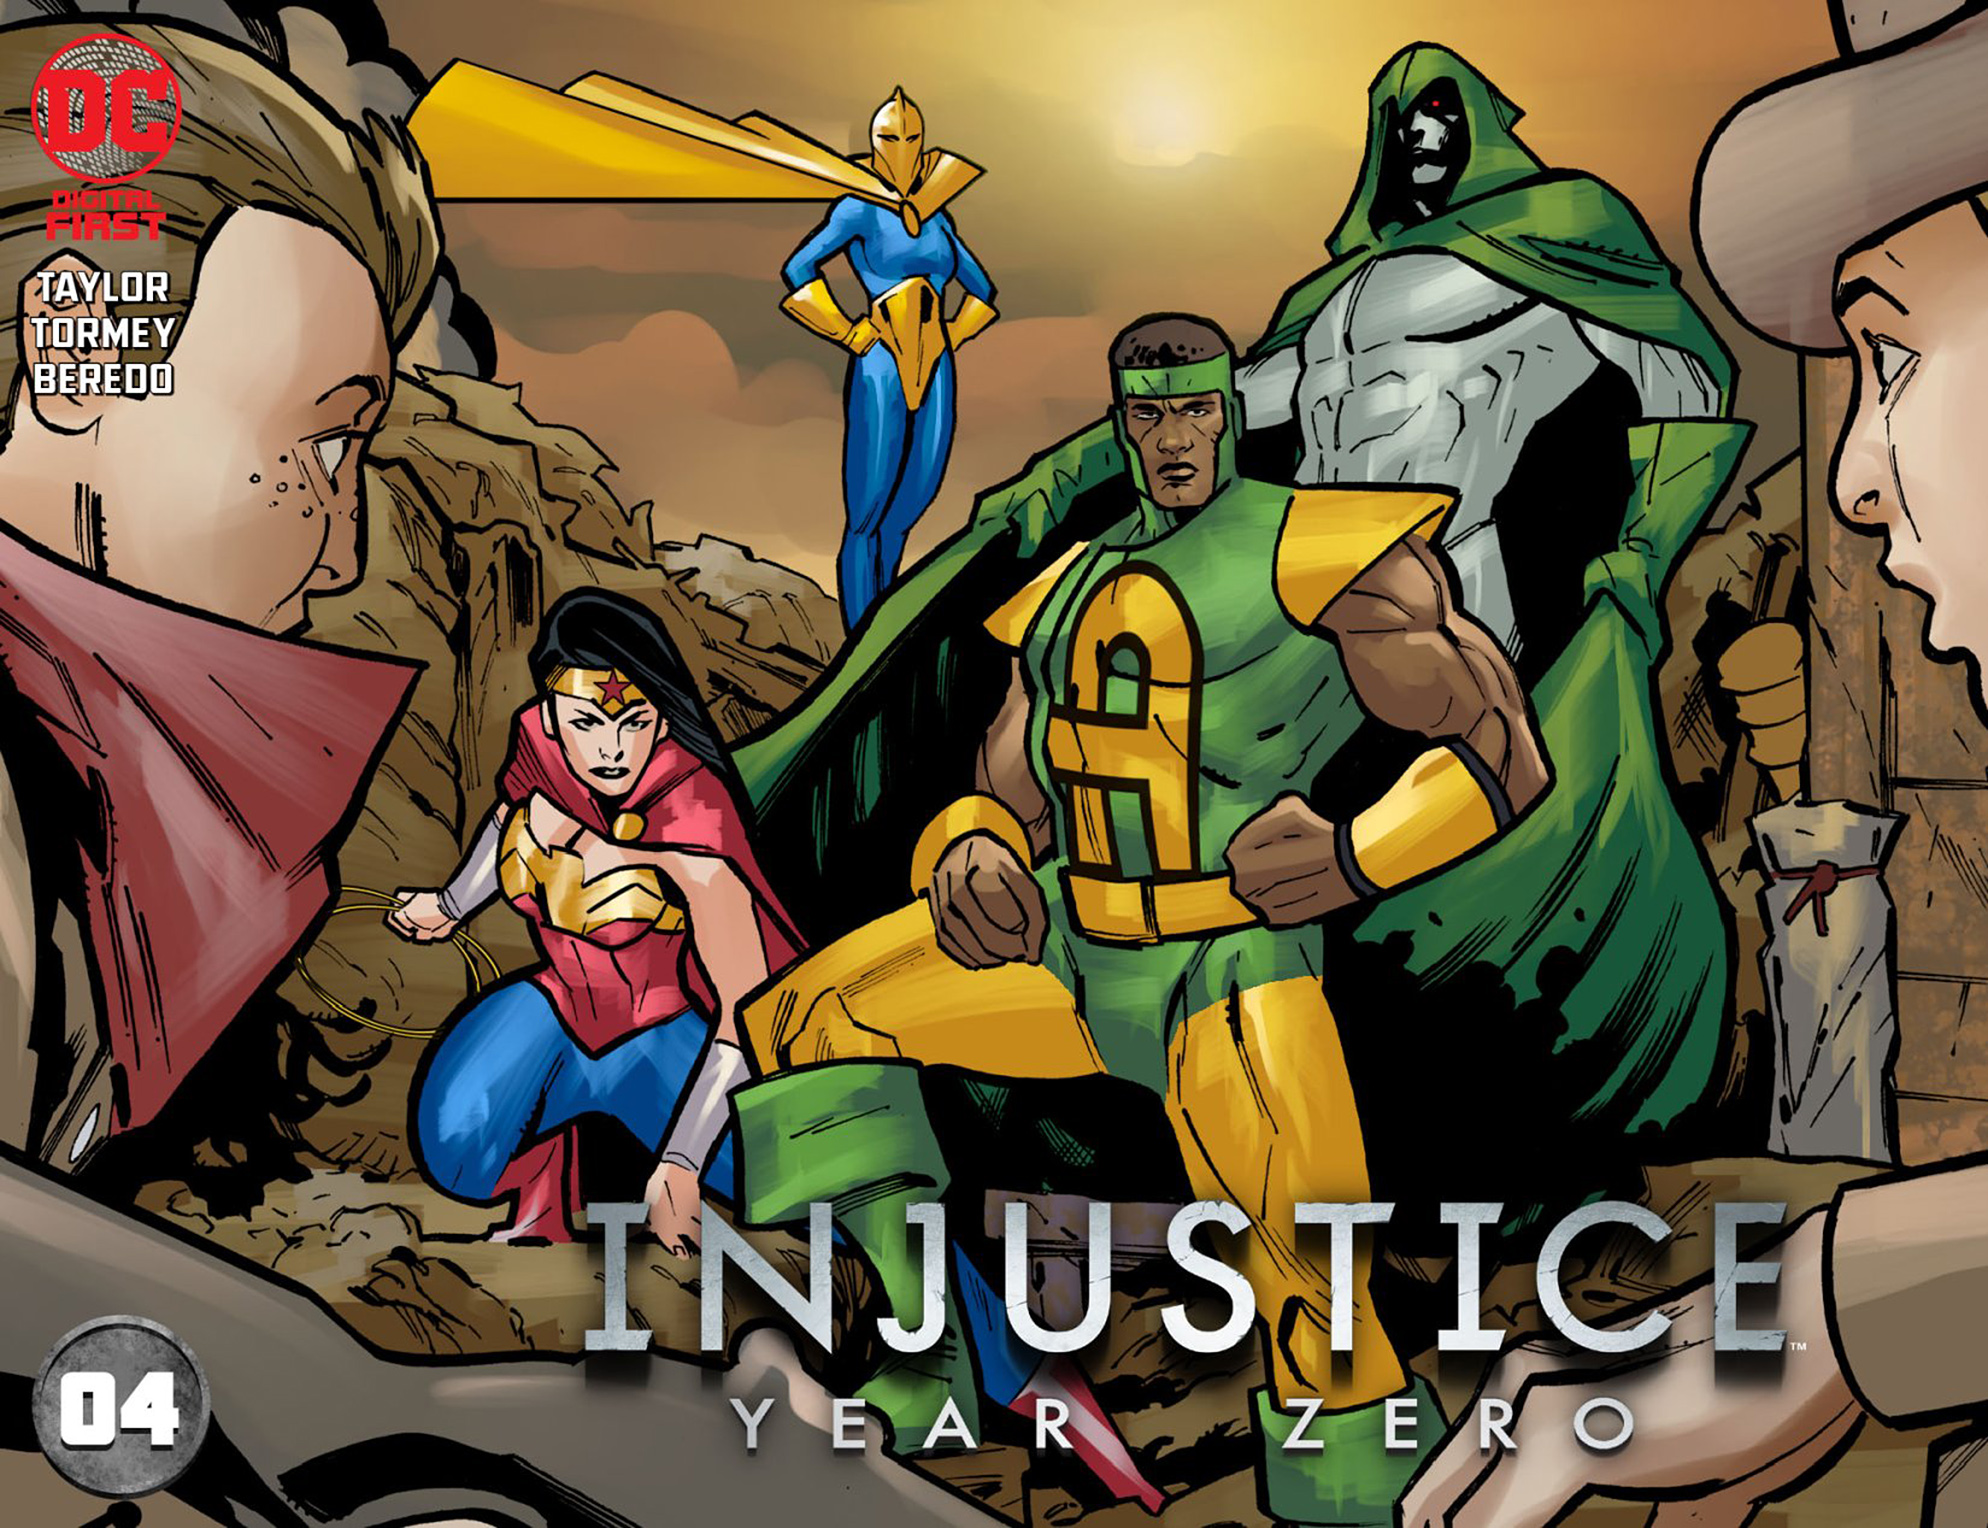 Com x life. DC Comics Injustice year Zero #8 на русском языке.